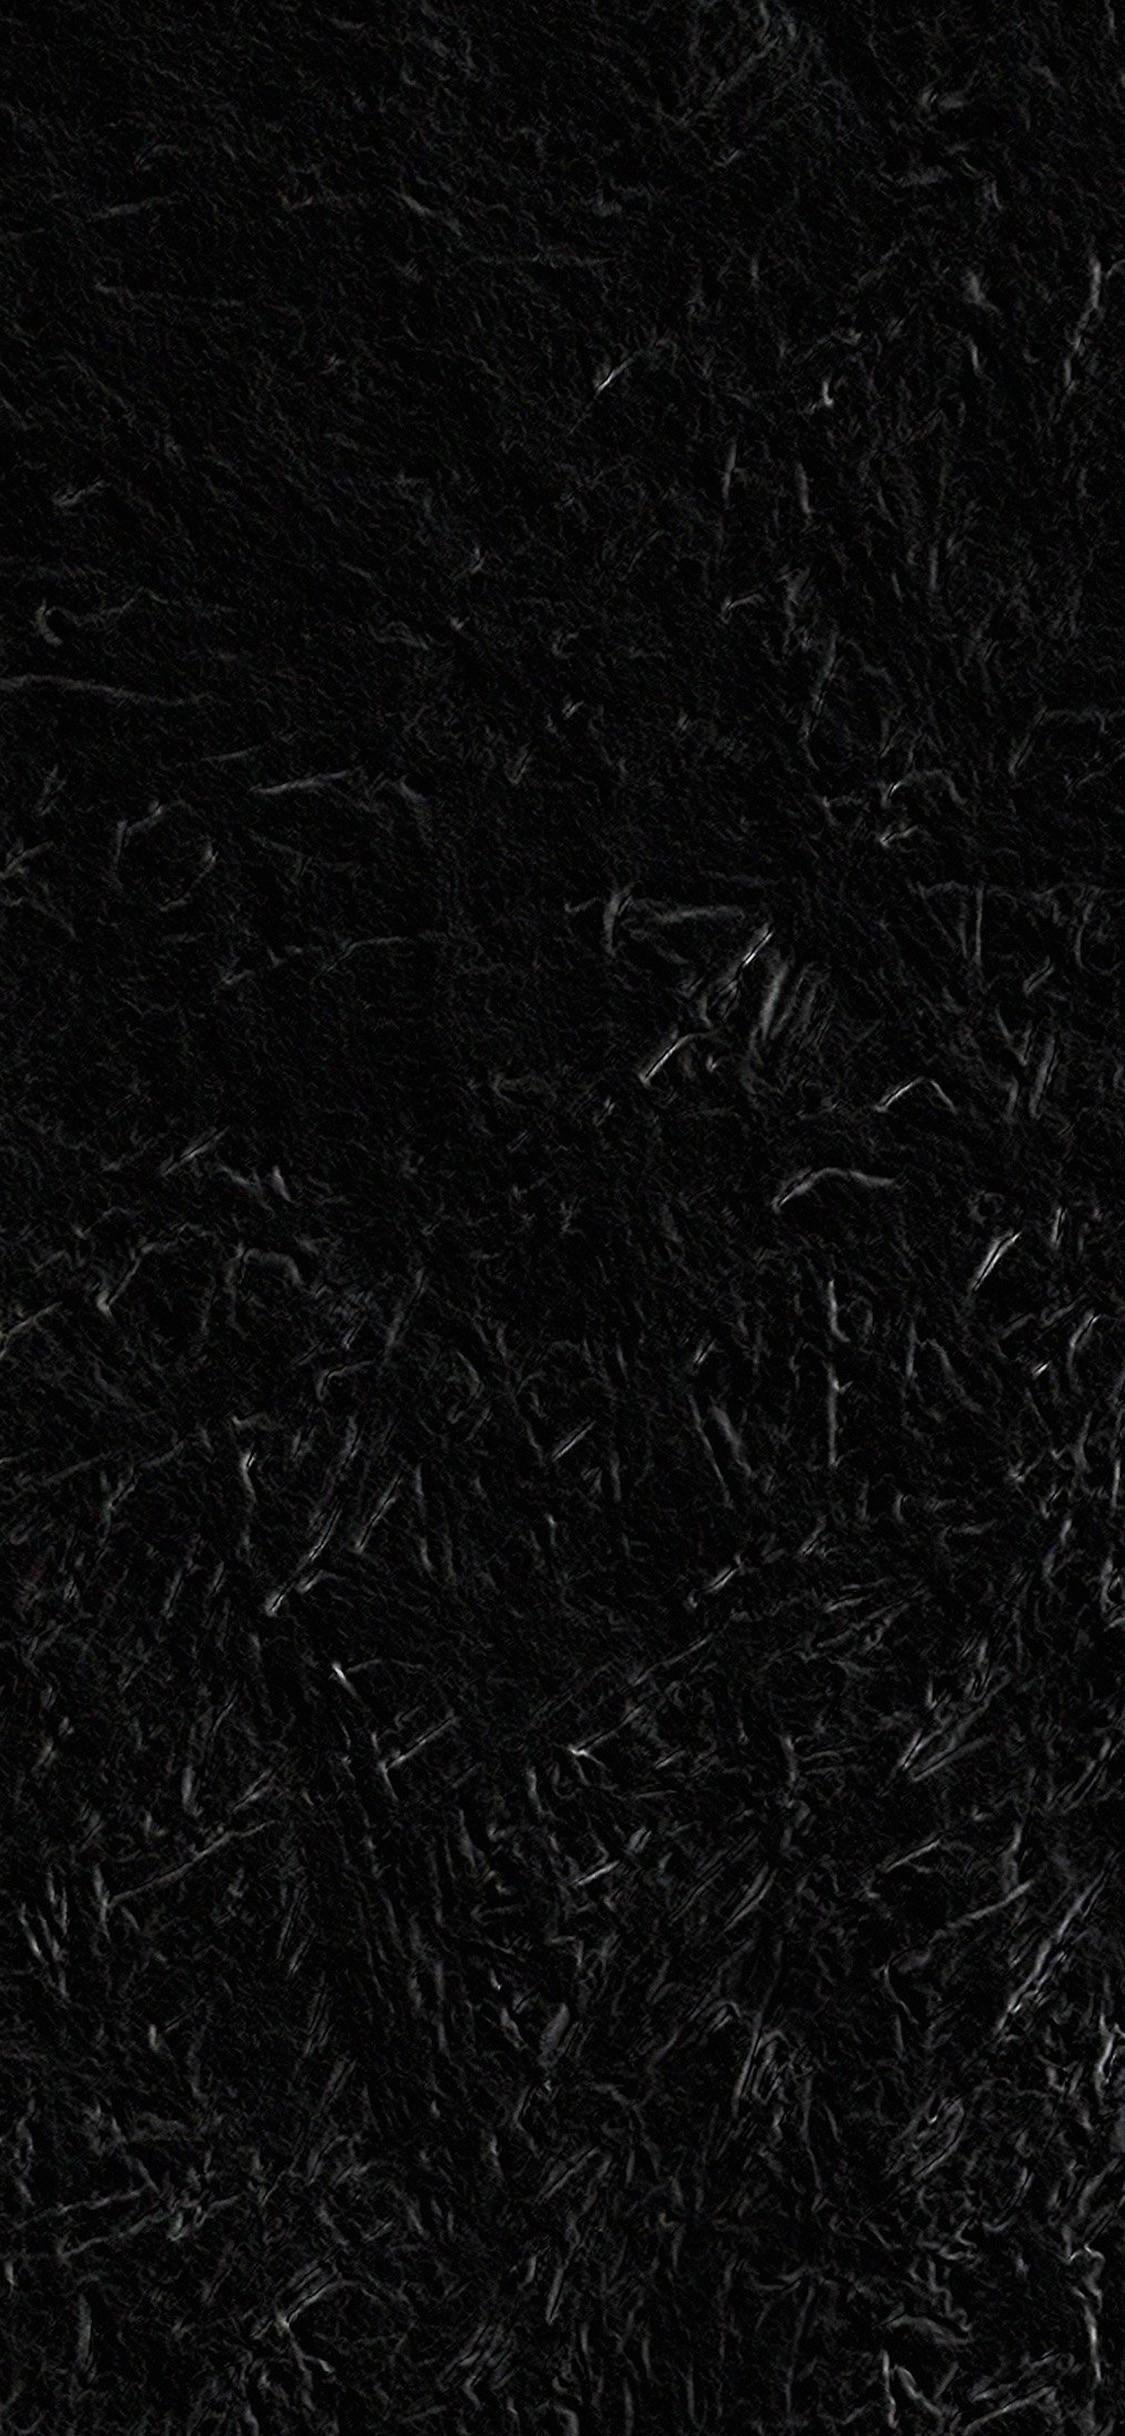 4k Dark For iPhone Wallpapers - Wallpaper Cave